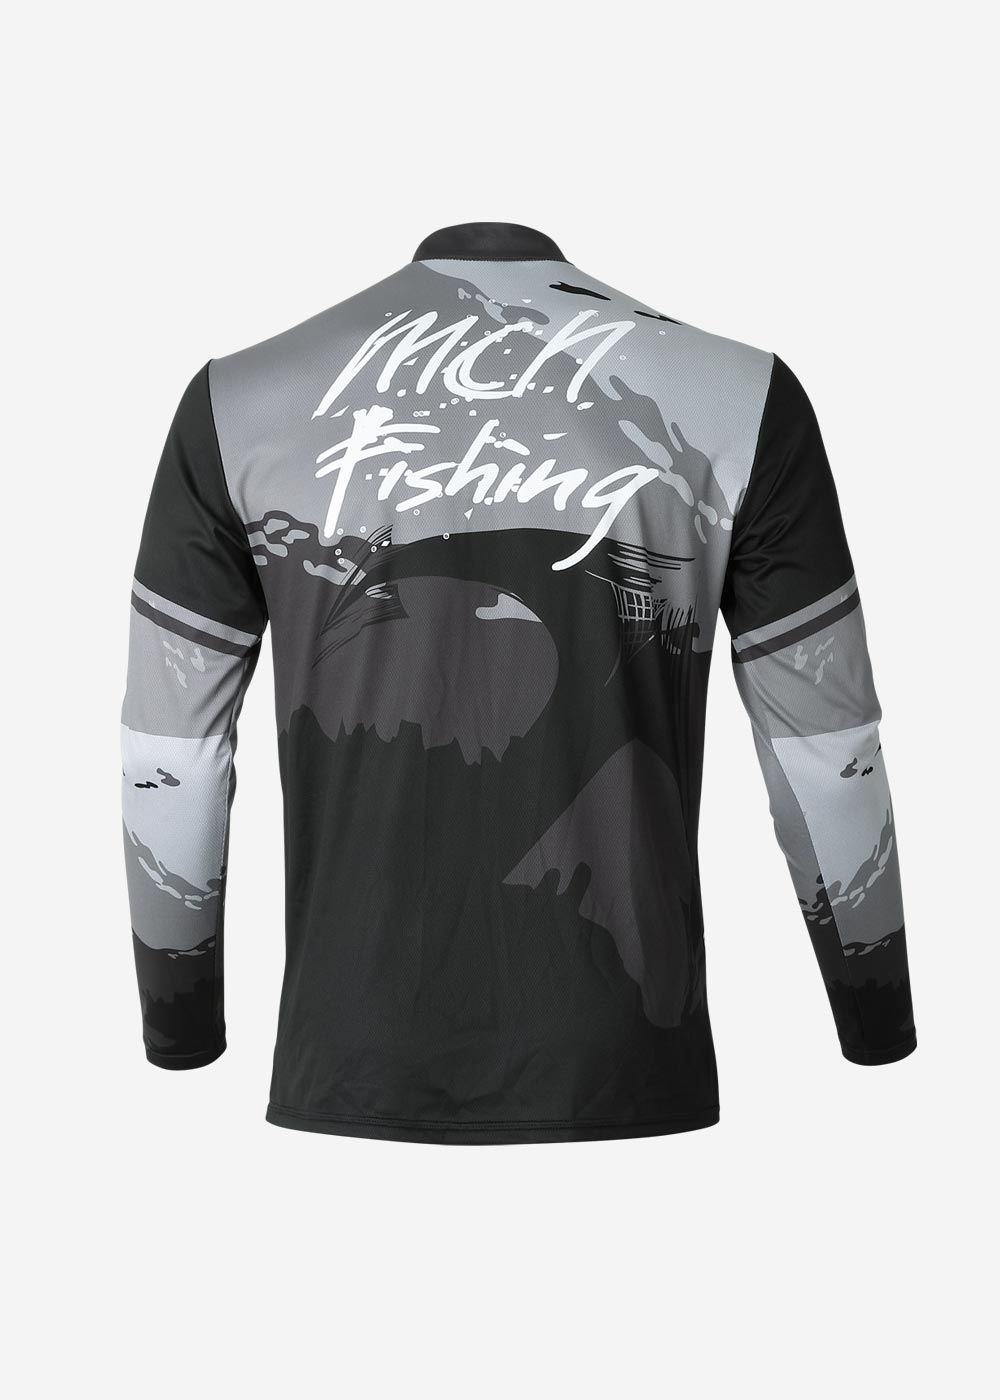 mcnfishing[MFJL-ANCHOR]mcn낚시단체복 앵커 져지낚시복 낚시의류 낚시토너먼트 낚시팀복반집업 티셔츠 기능성 아웃도어웨어